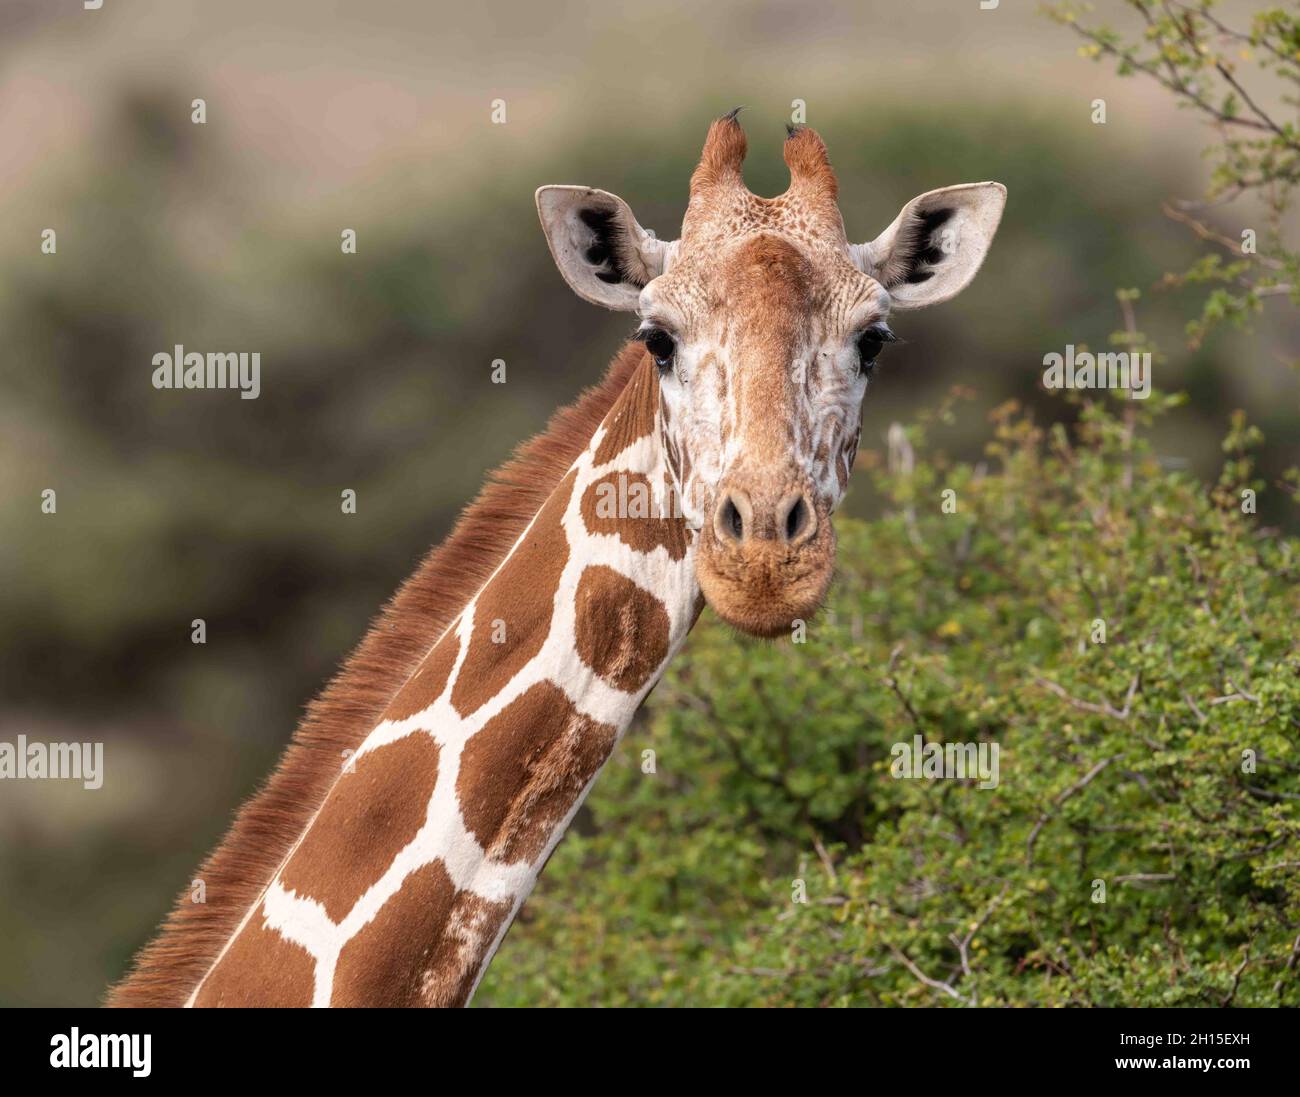 Reticulated giraffe close-up portrait acacia bush background. Stock Photo